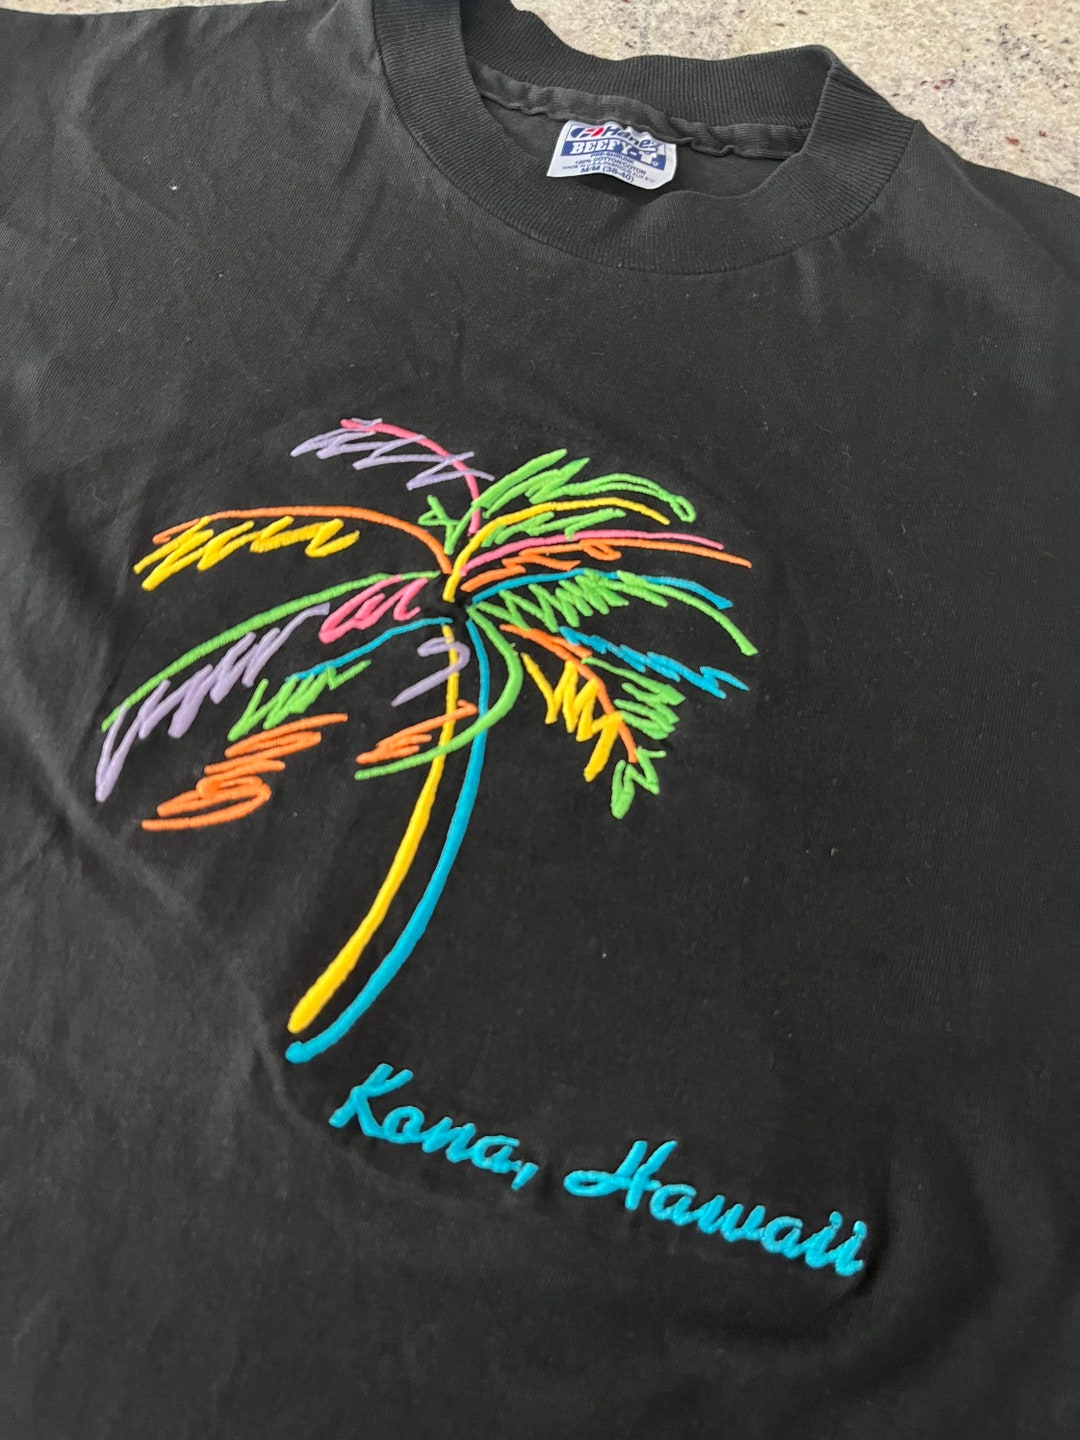 Vintage Kona Hawaii T Shirt Size Medium Quality Embroidered - Etsy